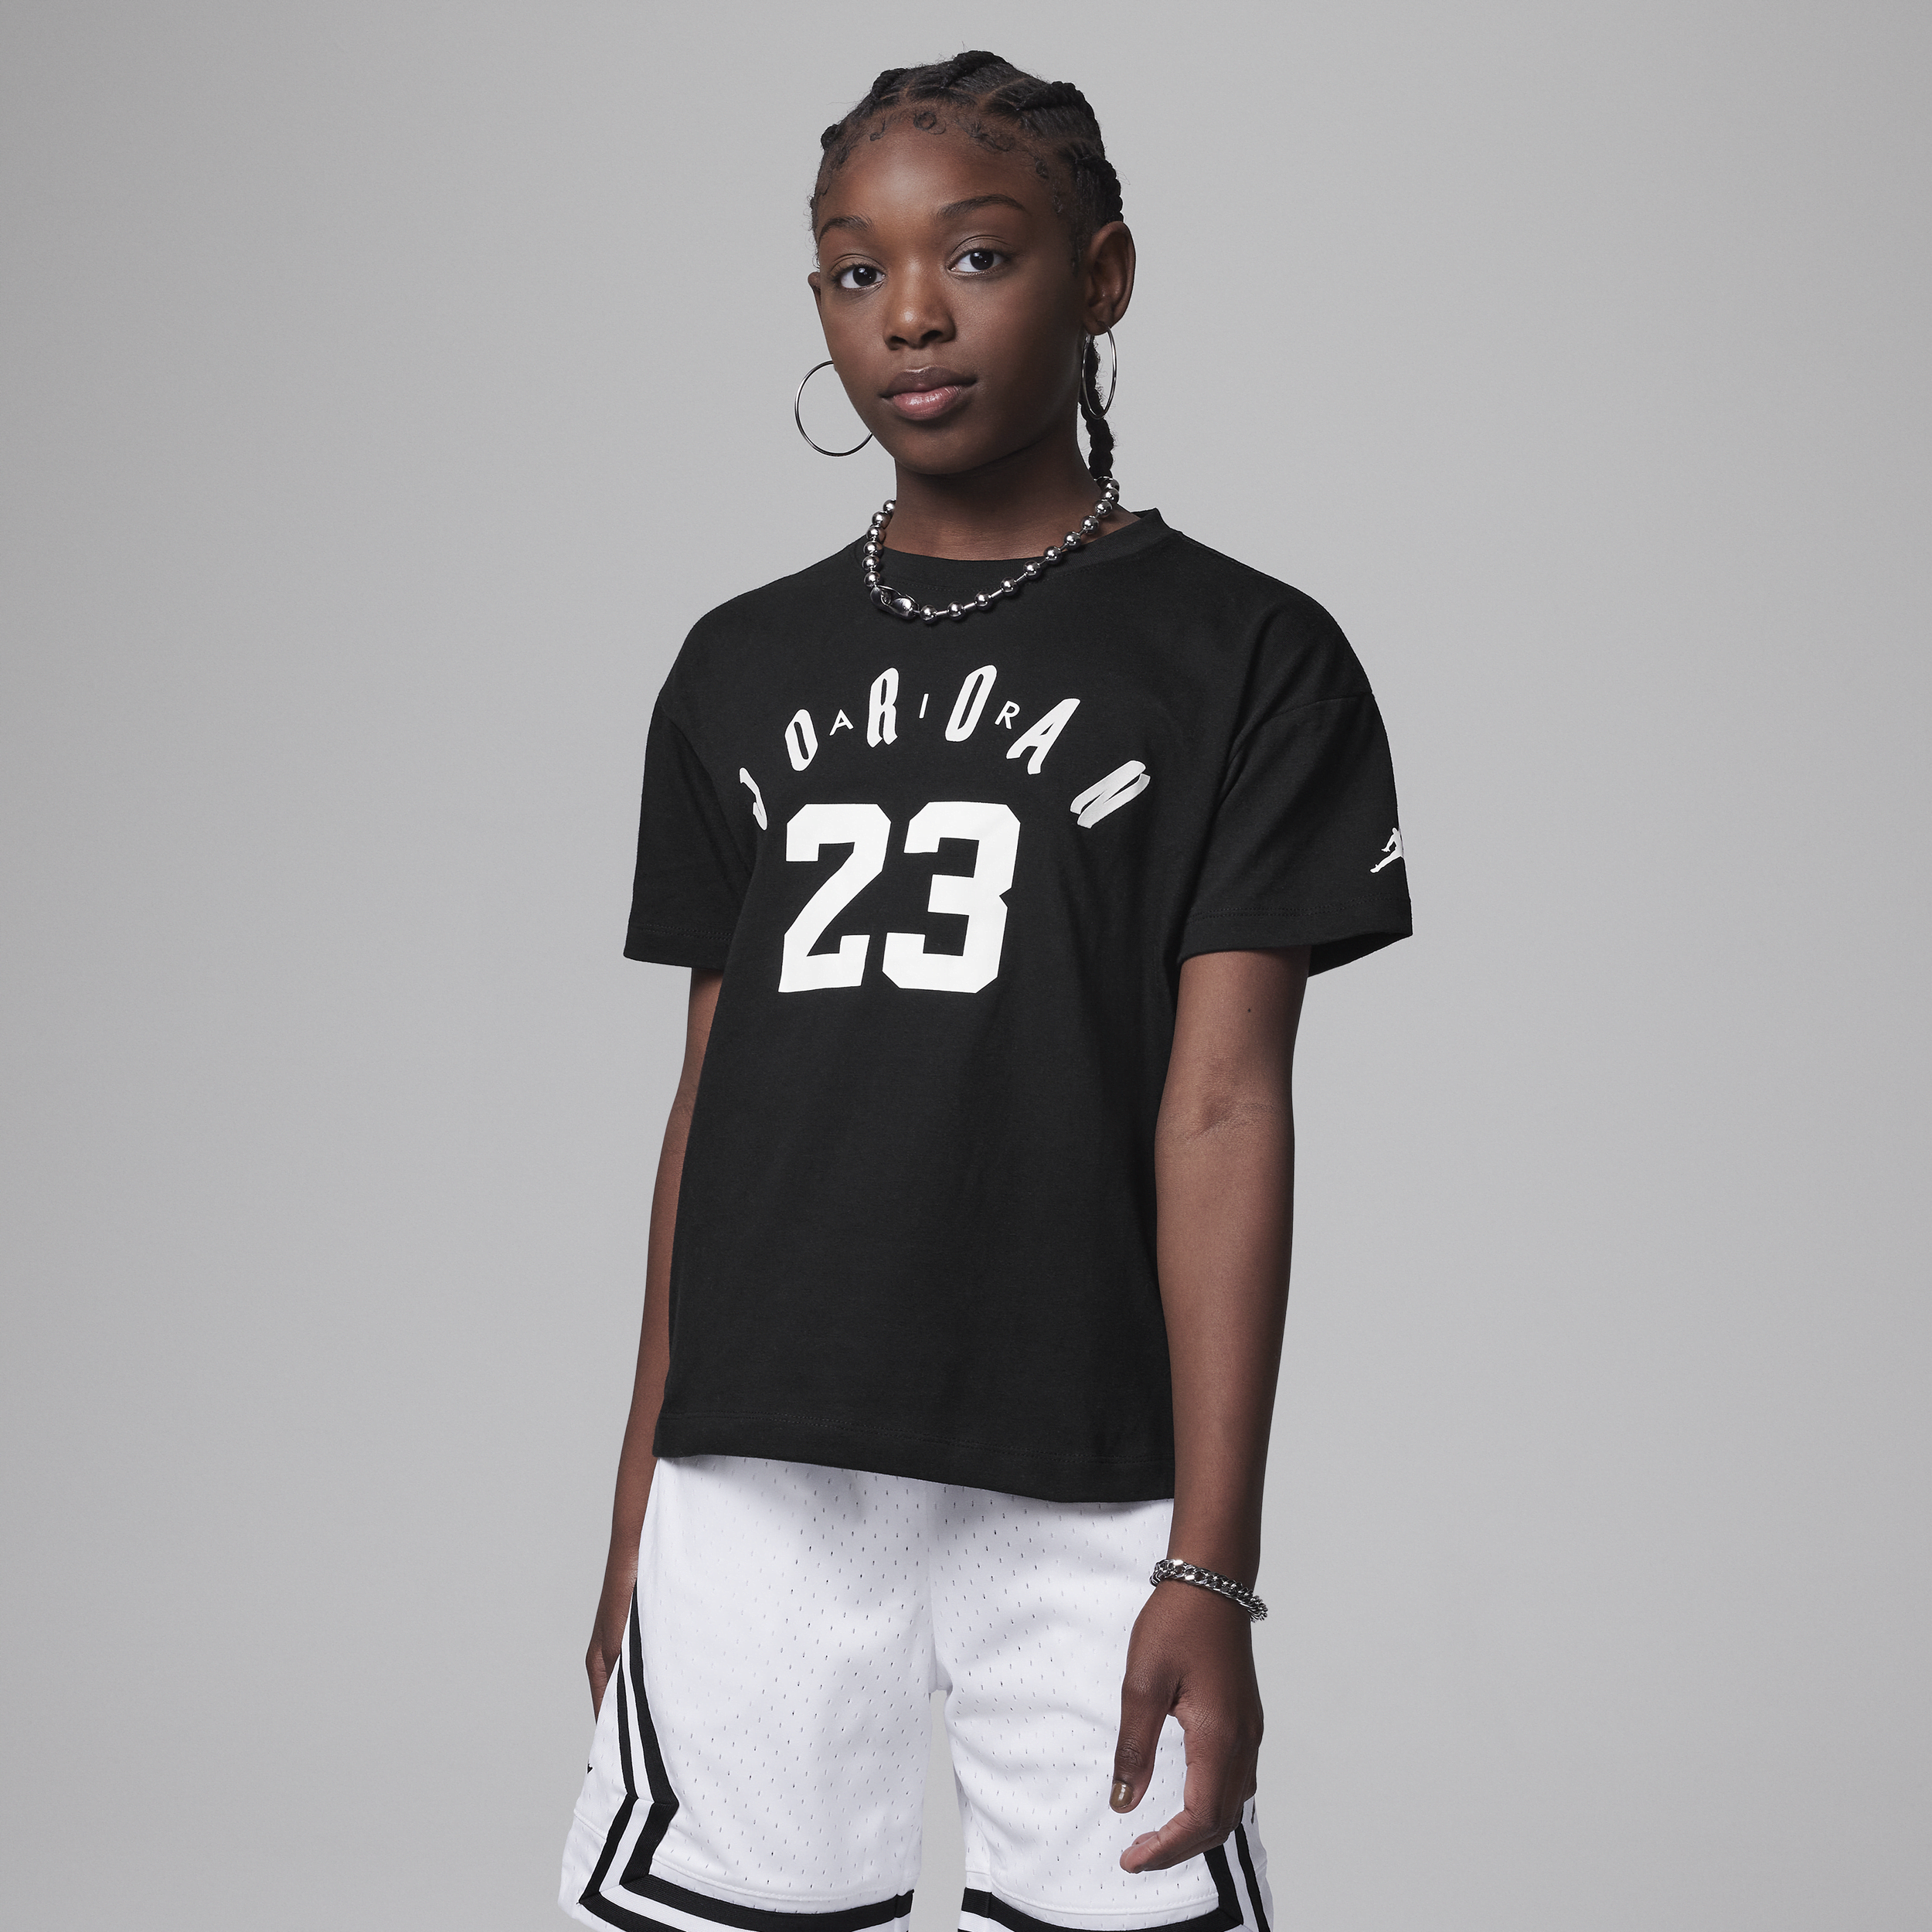 Jordan 23 Soft Touch Tee Camiseta - Niño/a - Negro